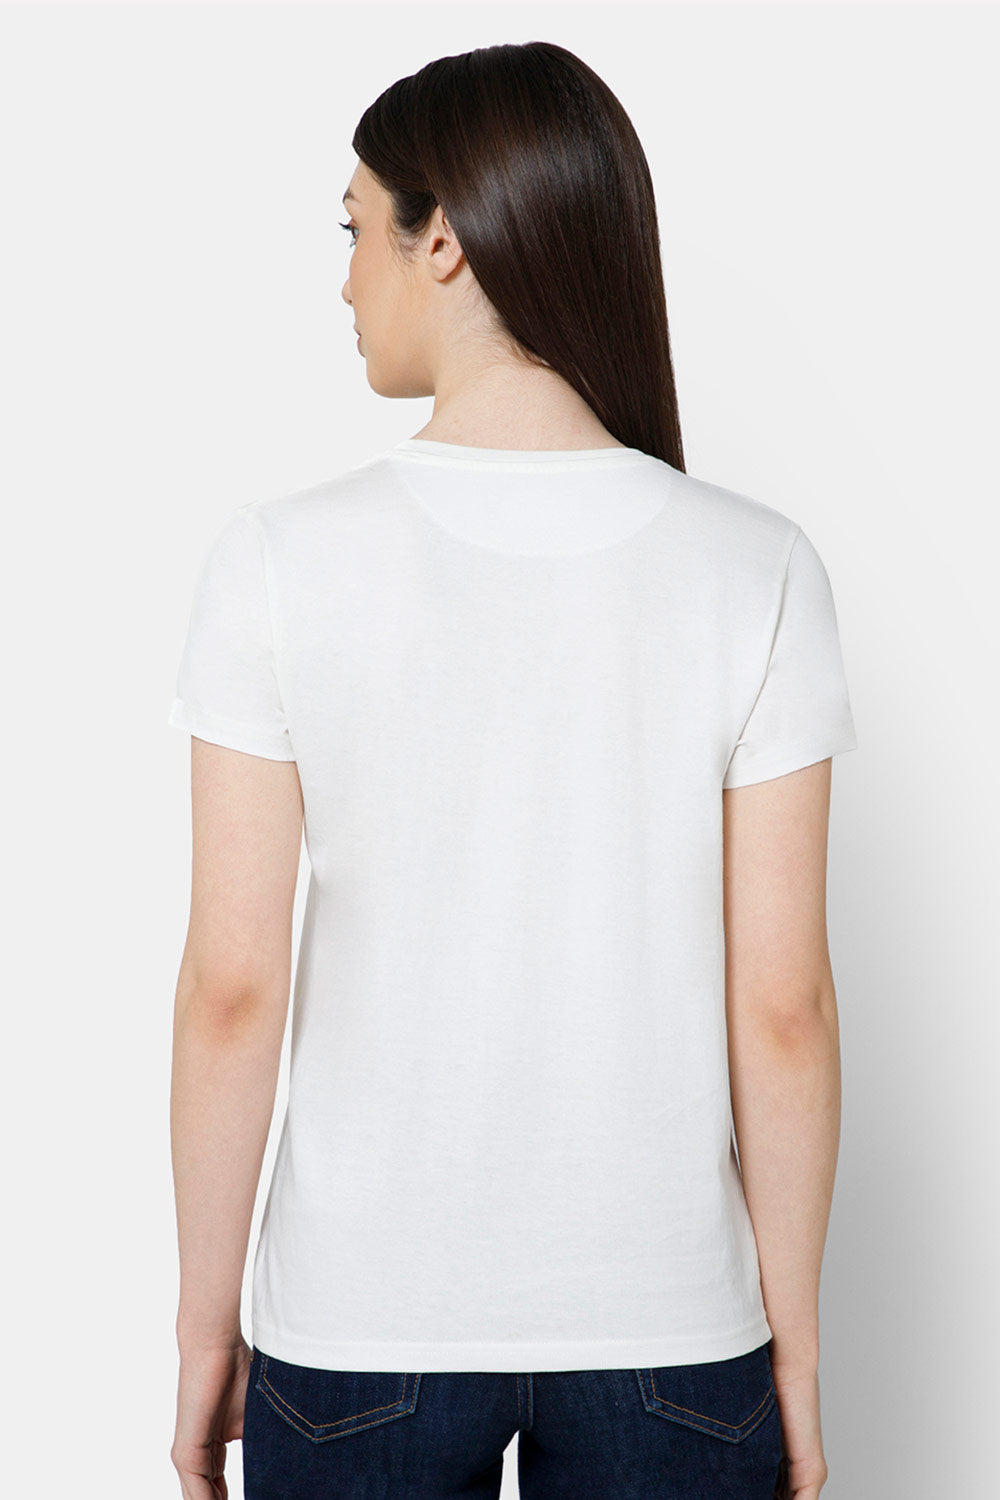 Jusperf Women's Printed Crew Neck Casual T-Shirt - White - TS35